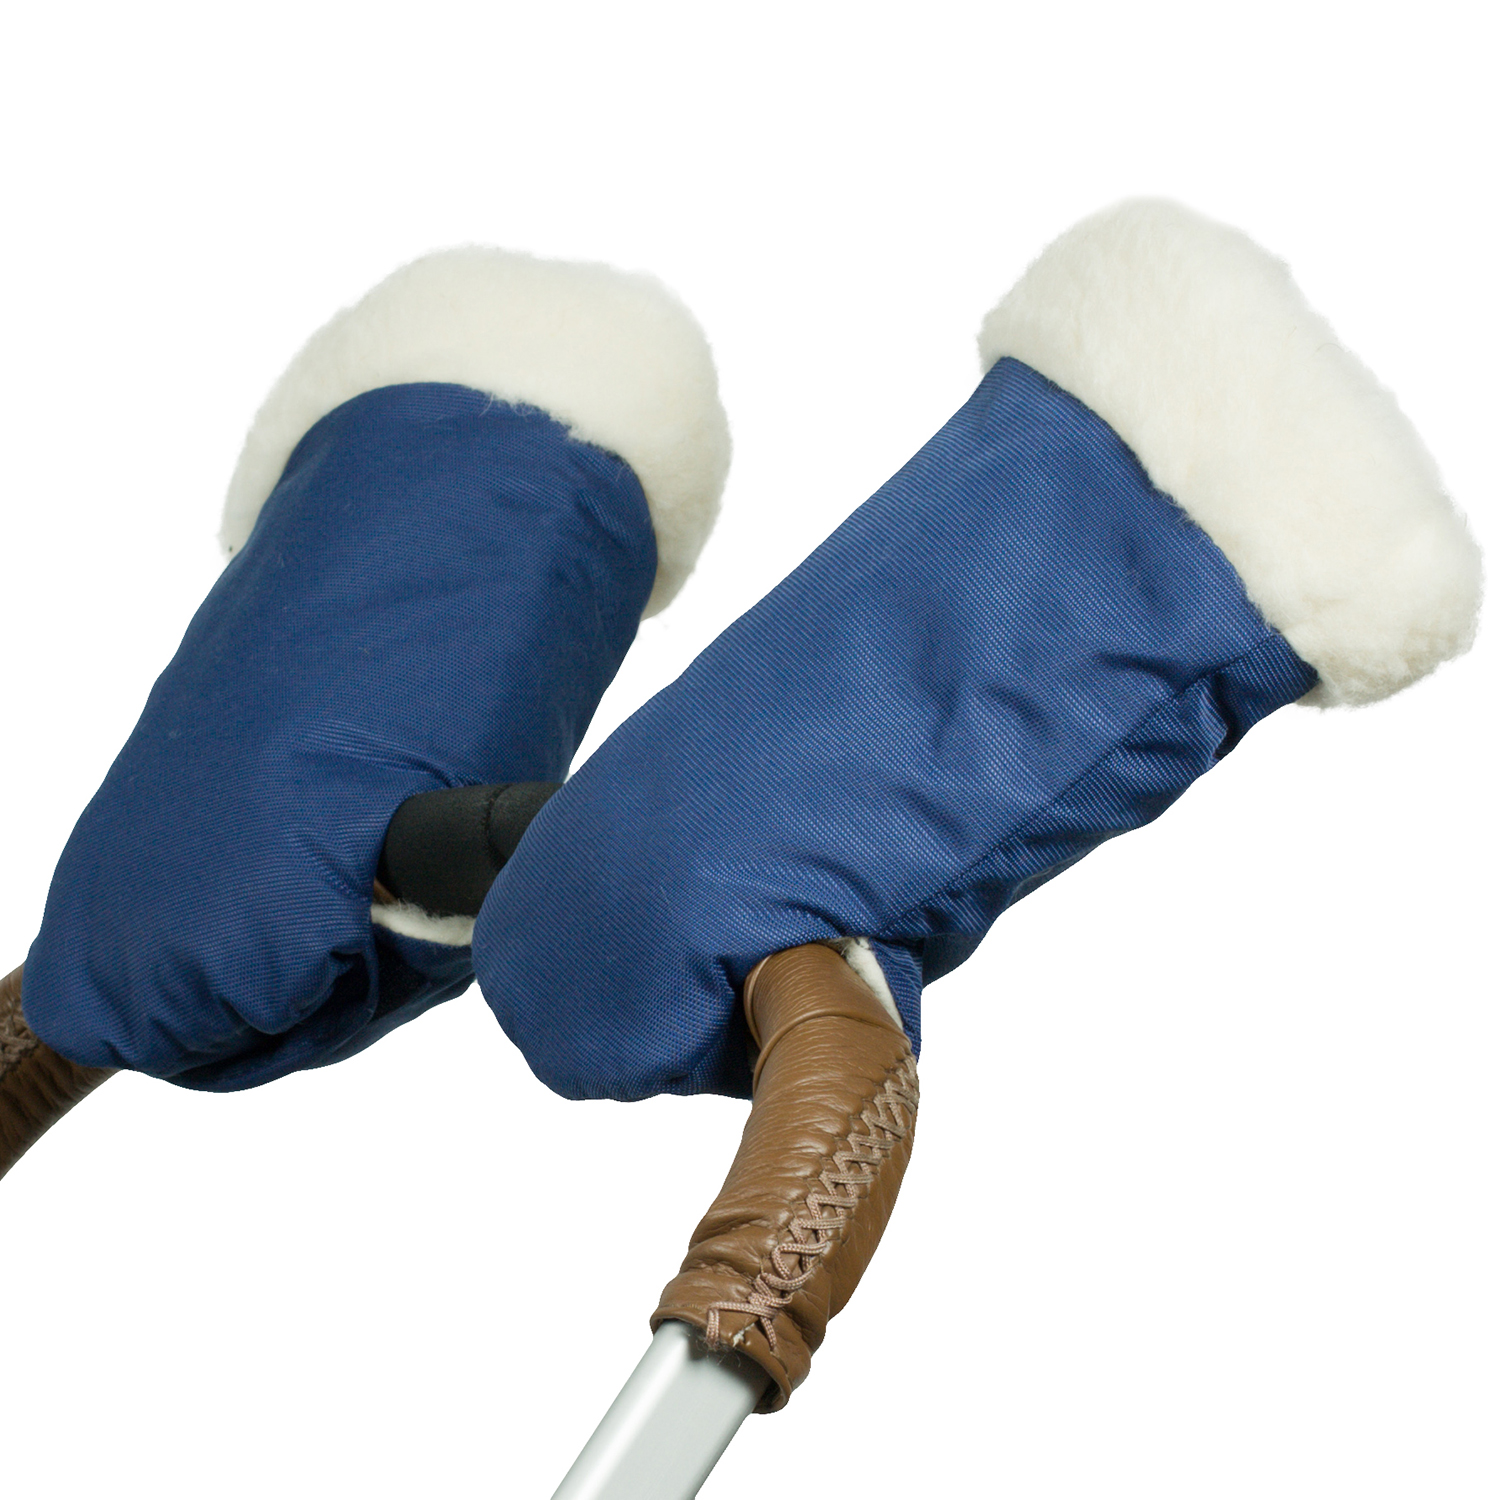 Муфта-рукавички для коляски Чудо-чадо меховая Прайм синяя МРМ03-001 - фото 4